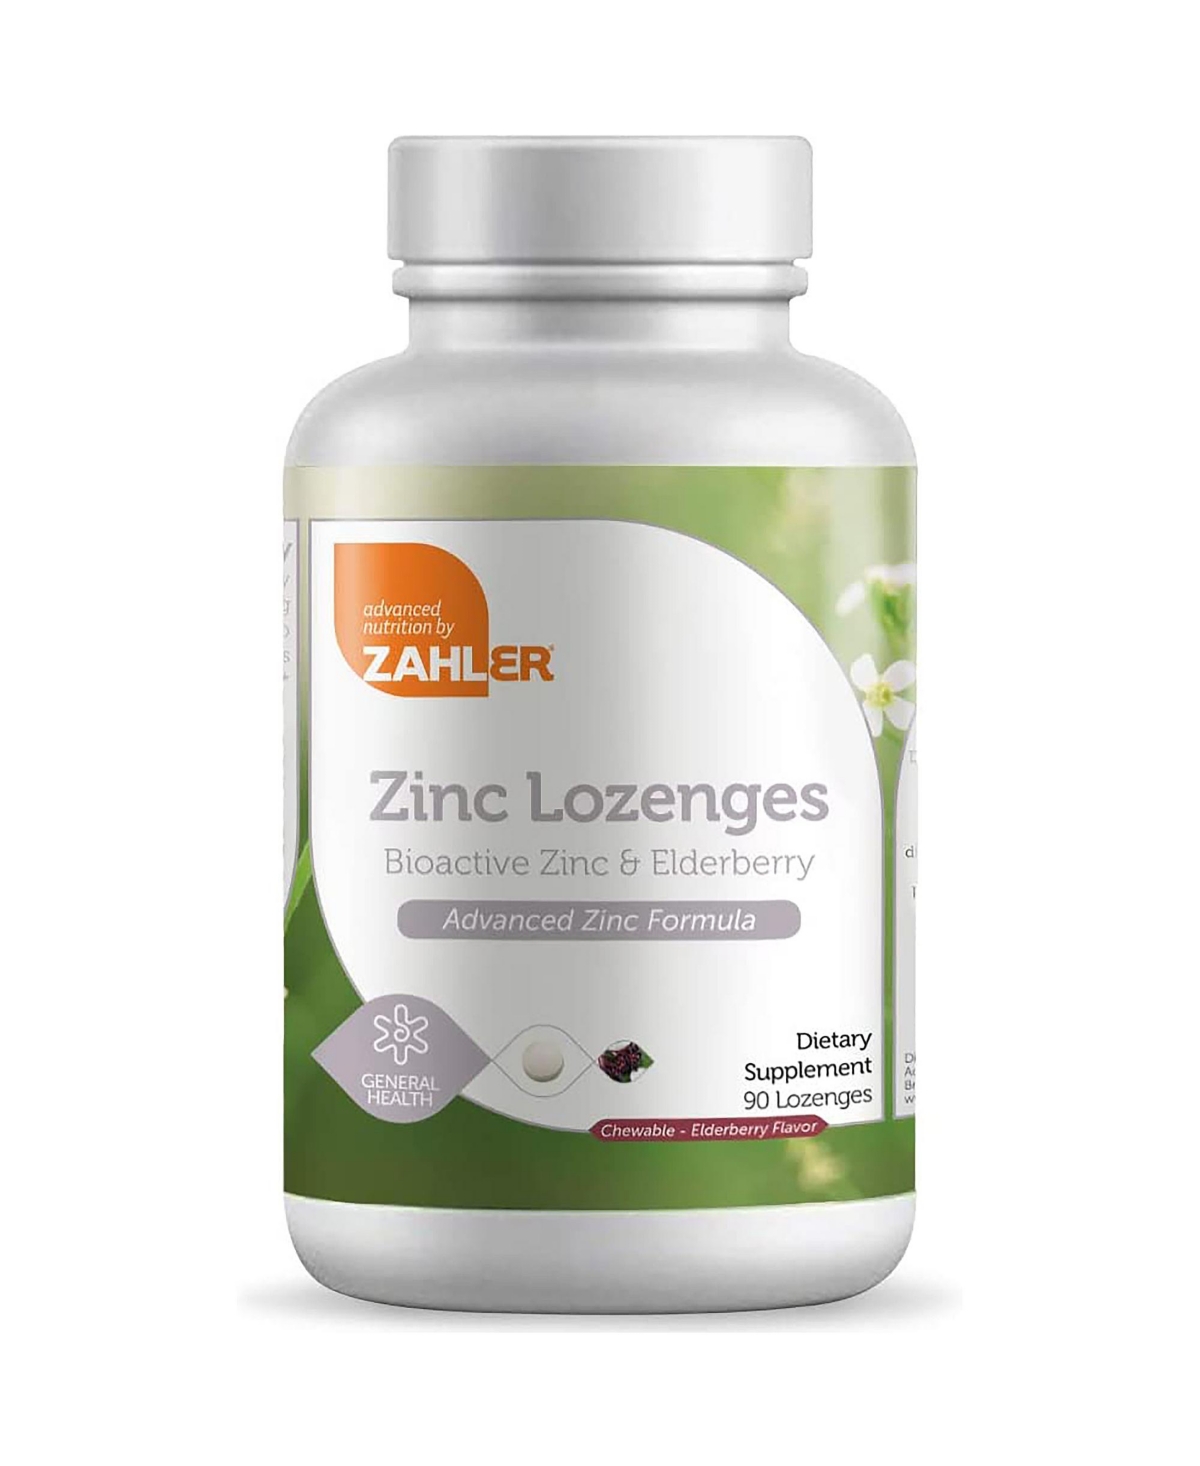 Zinc Lozenges with Elderberry, Antioxidant Supplement - 90 Lozenges